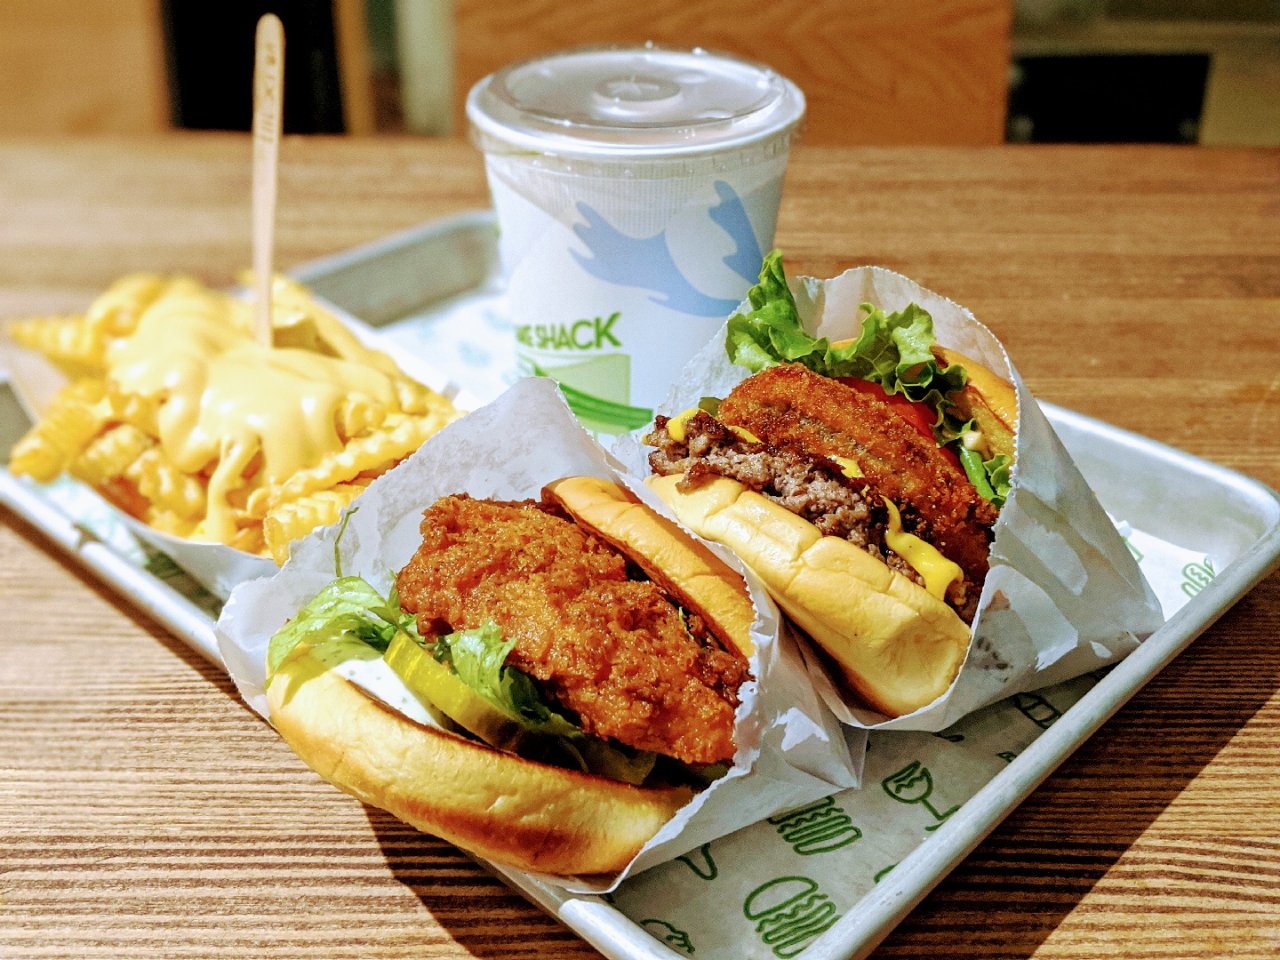 chick’n burger,Shake stack burger